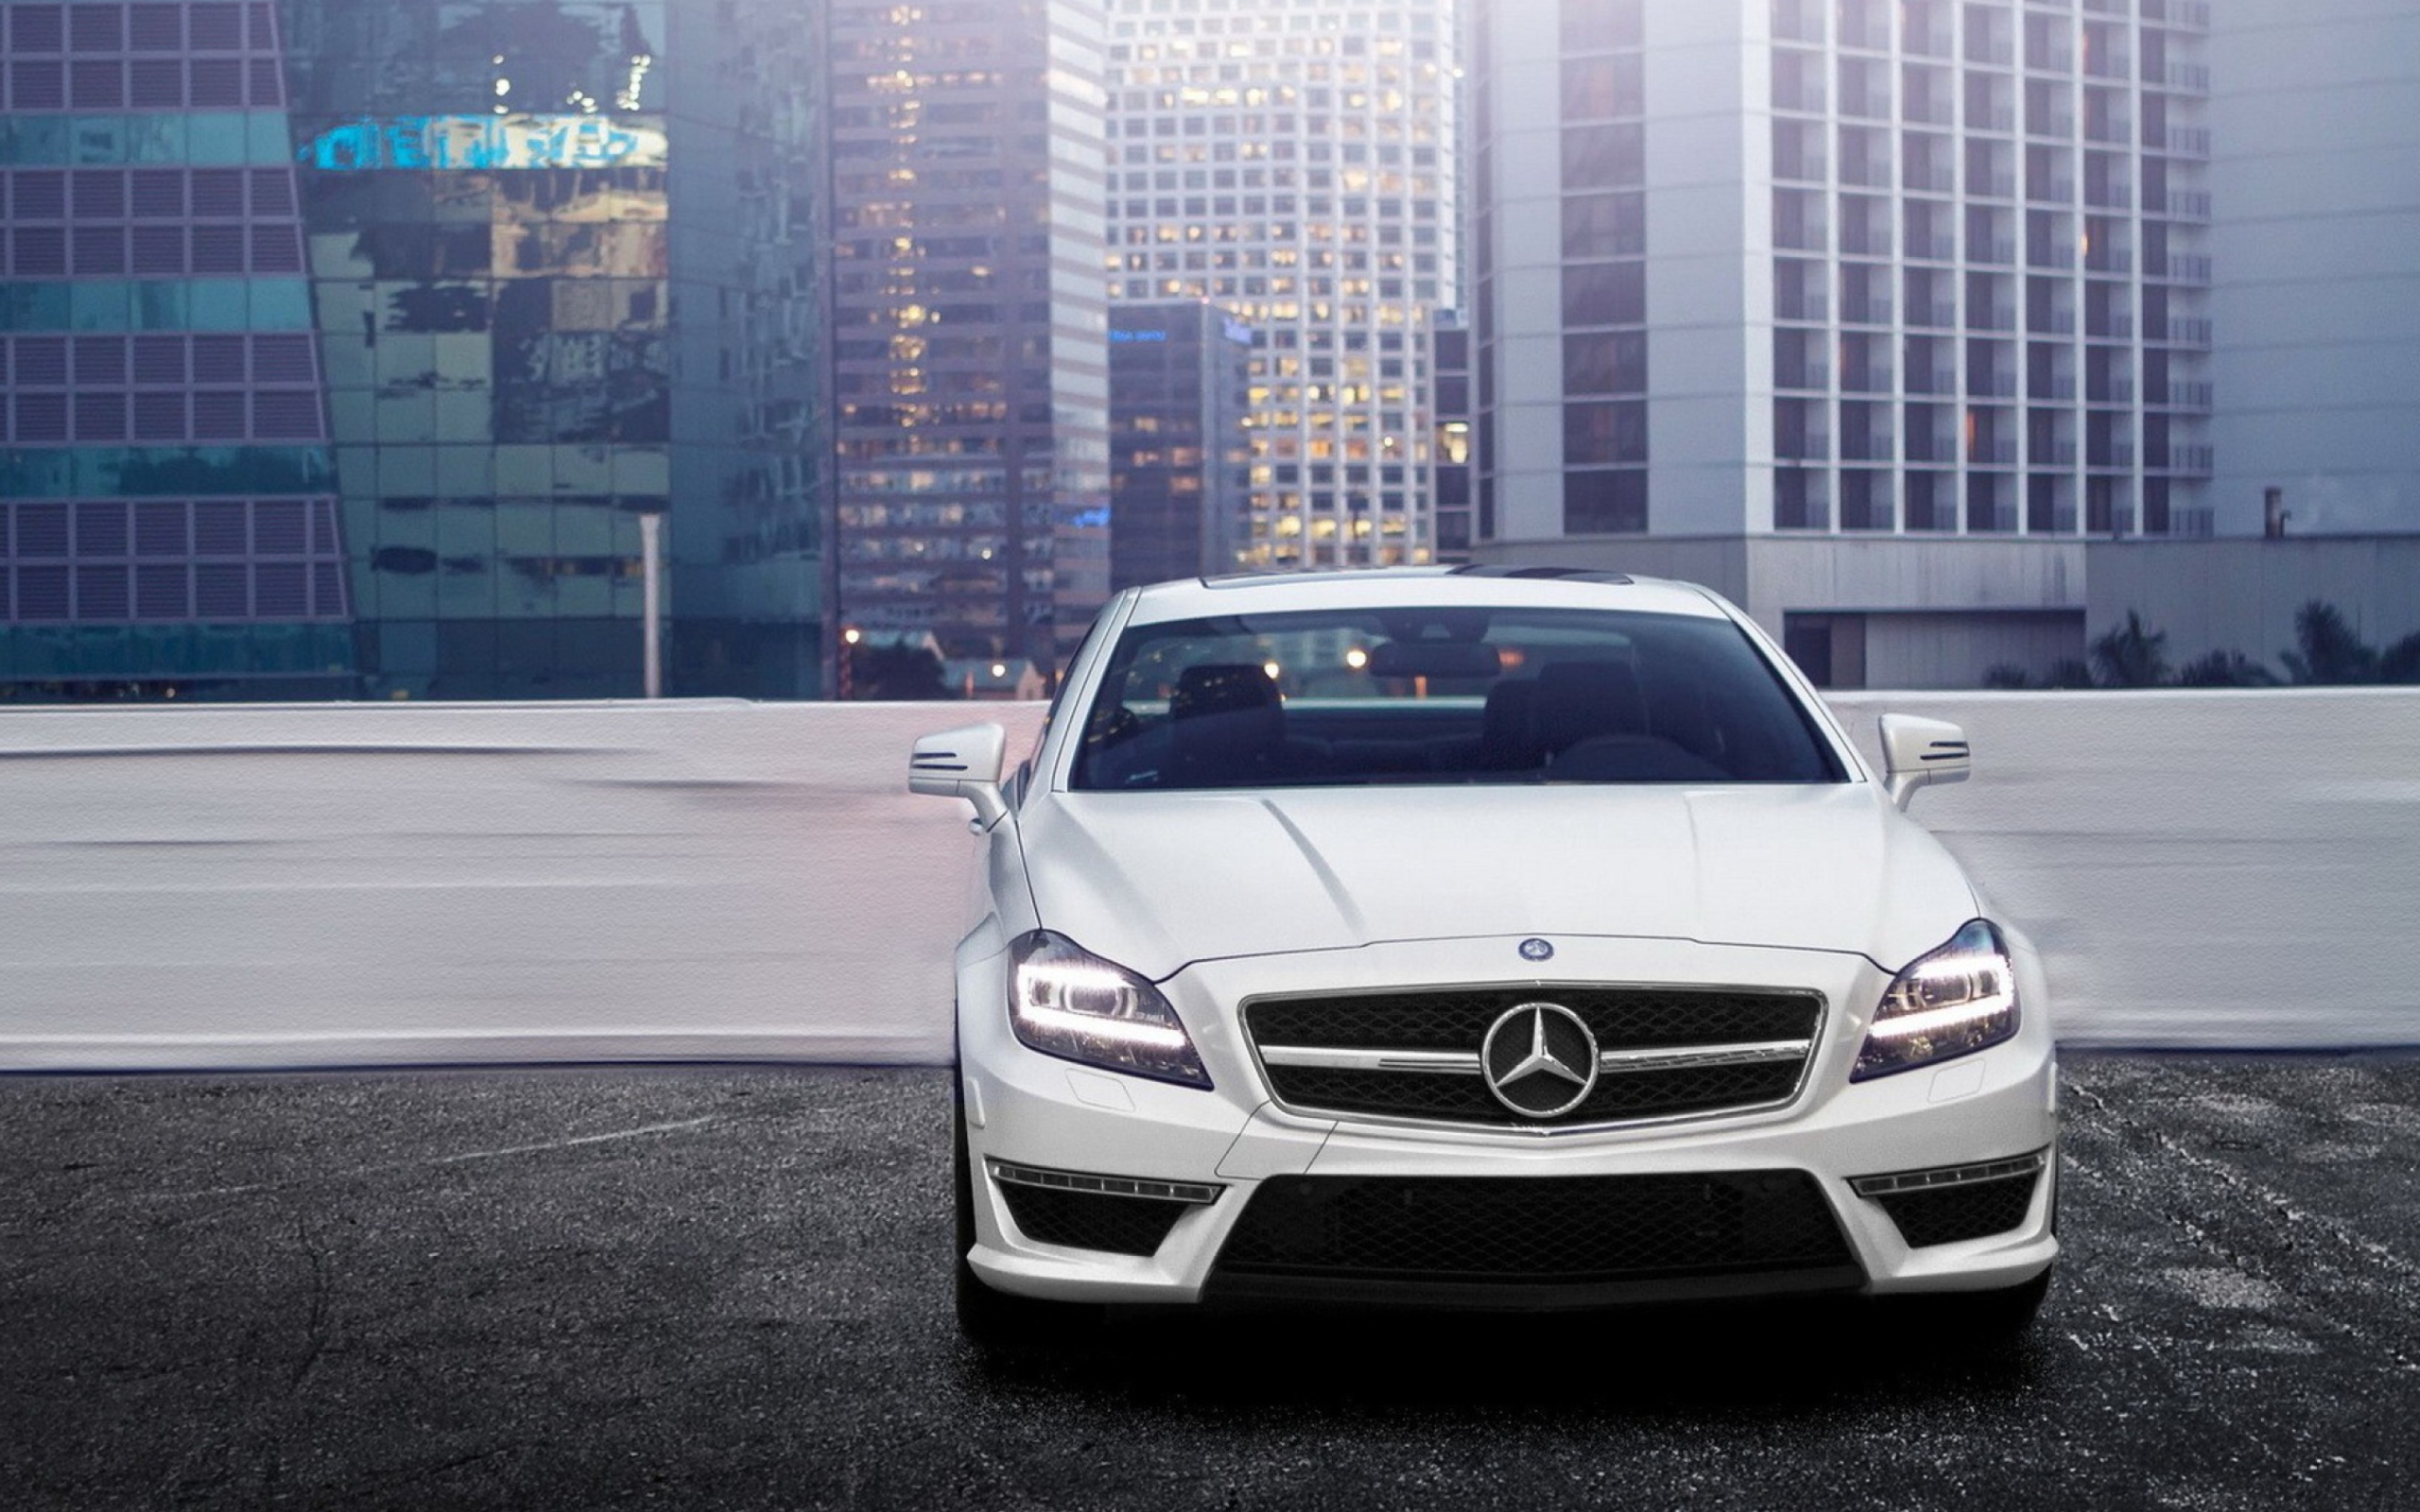 White Mercedes Benz Cls wallpaper 2560x1600